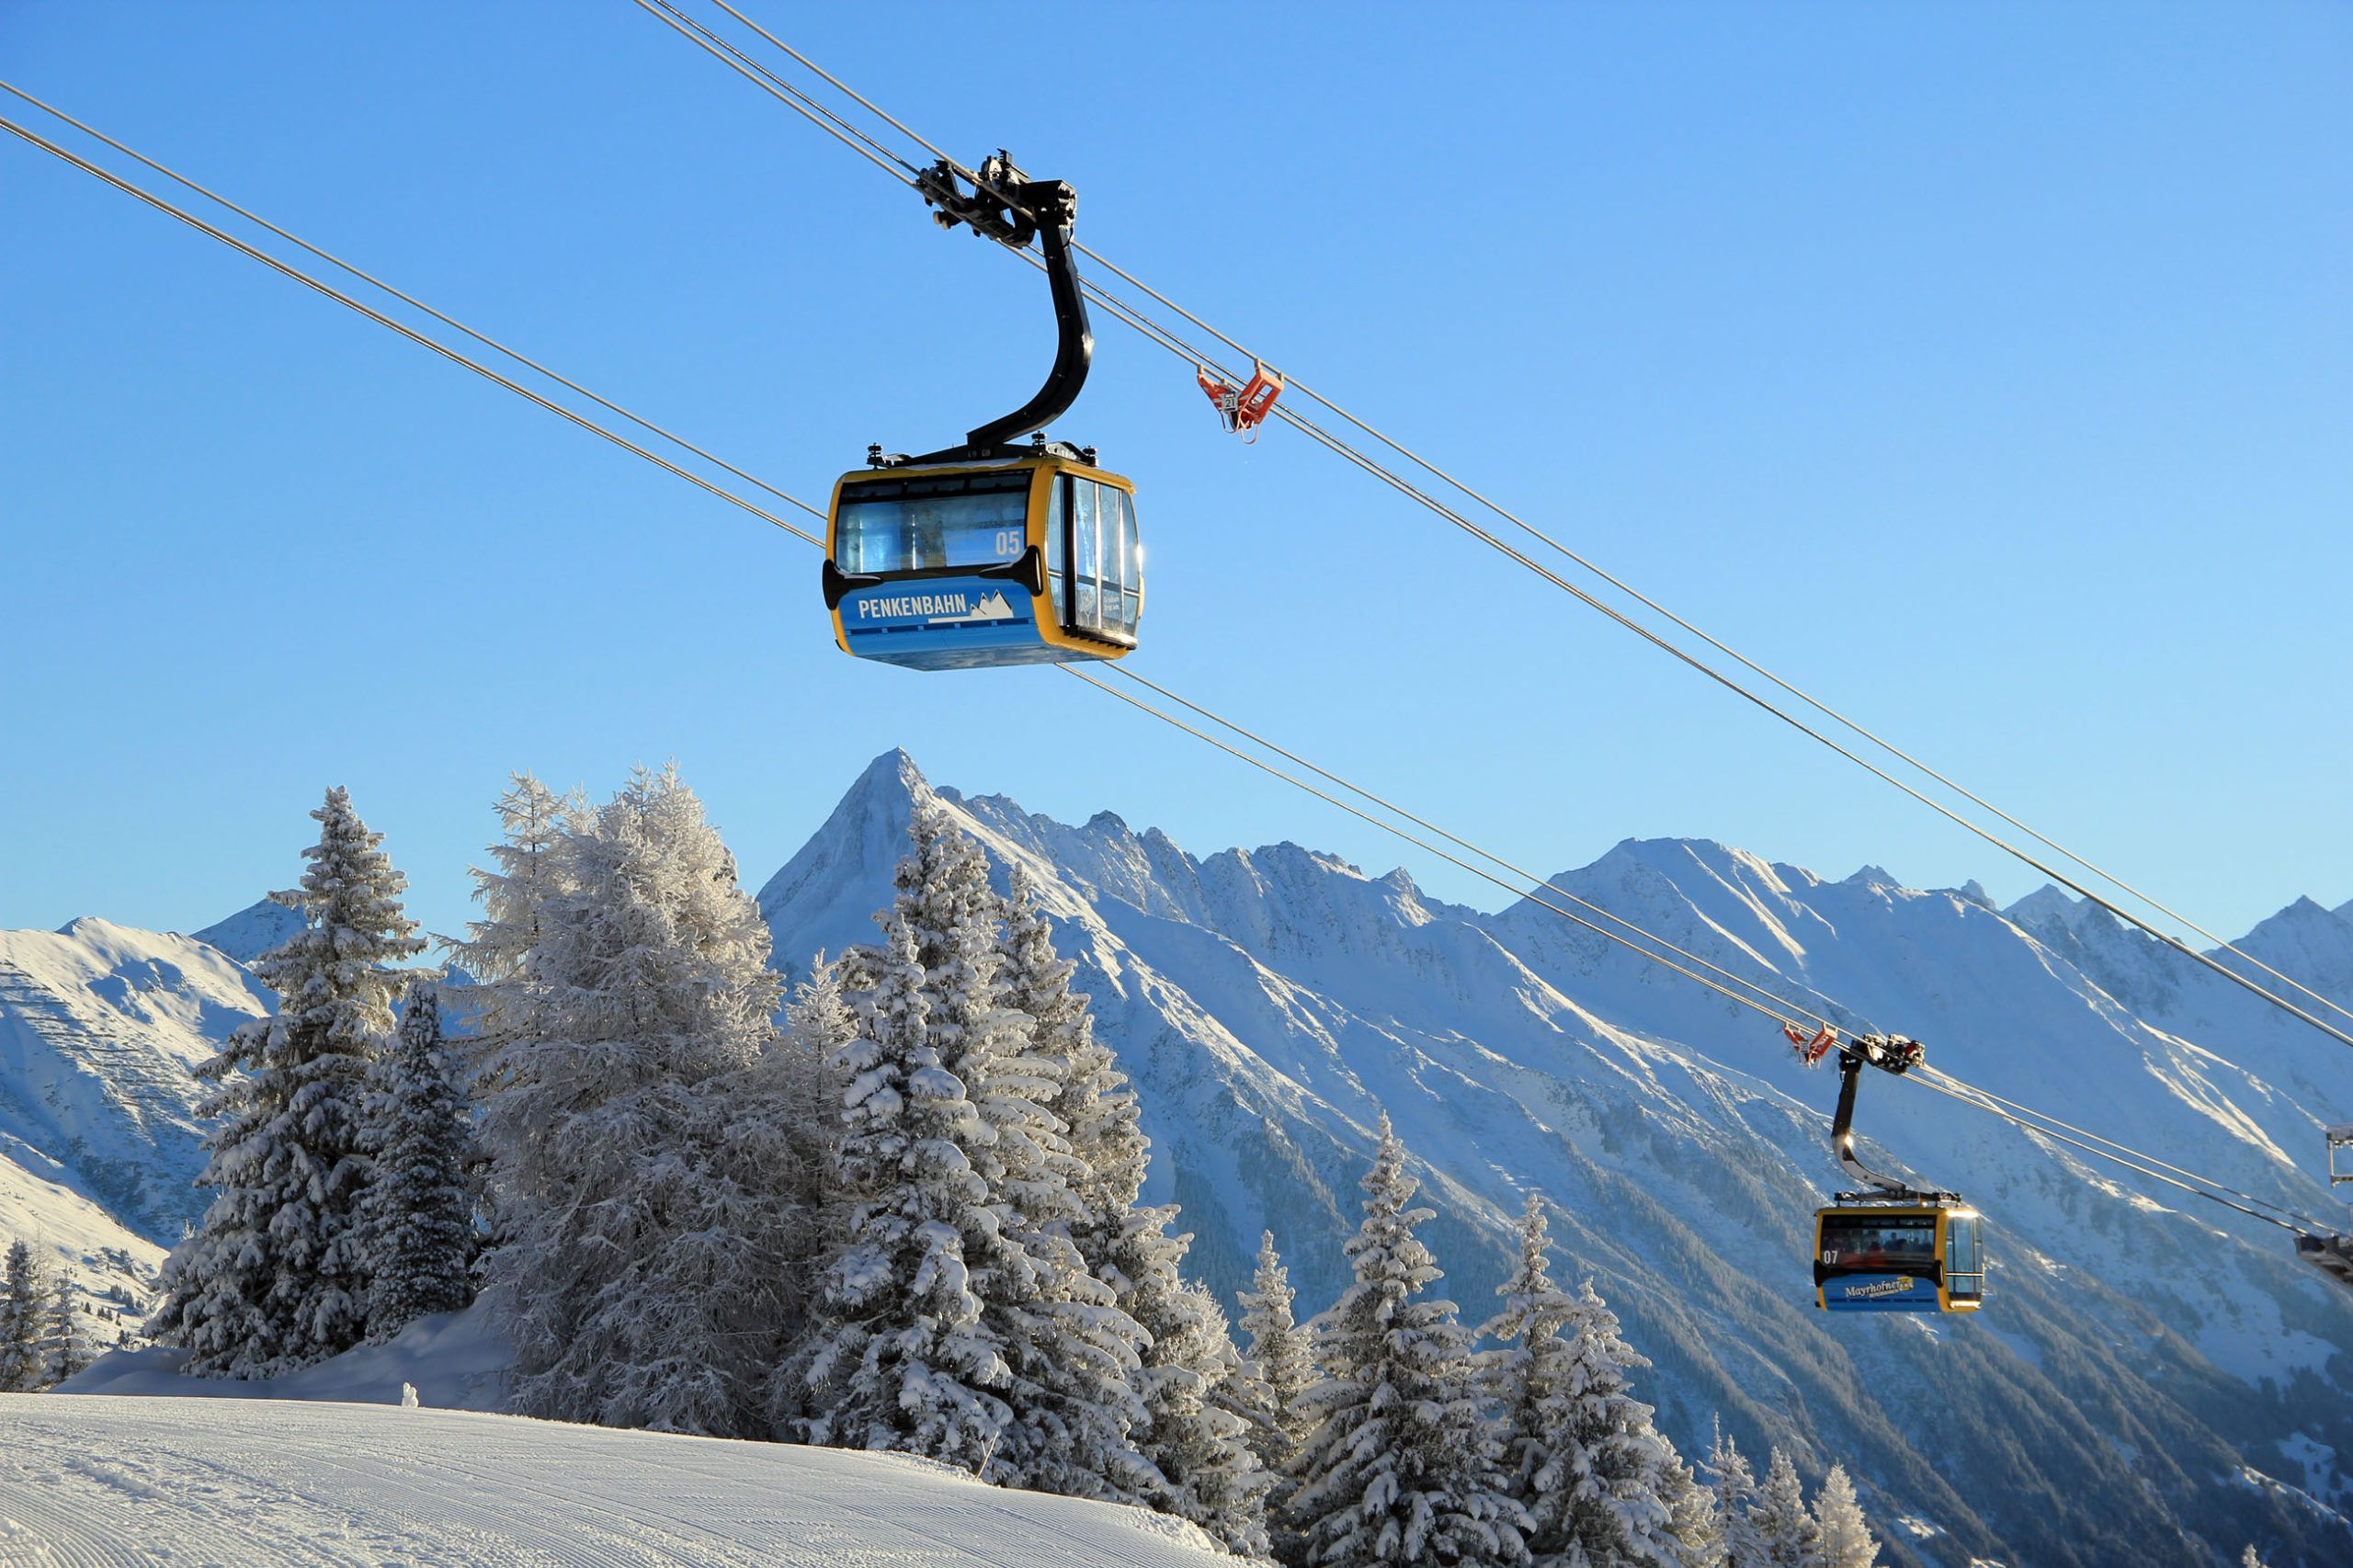 ski-area-mayrhofen-penken-gondola